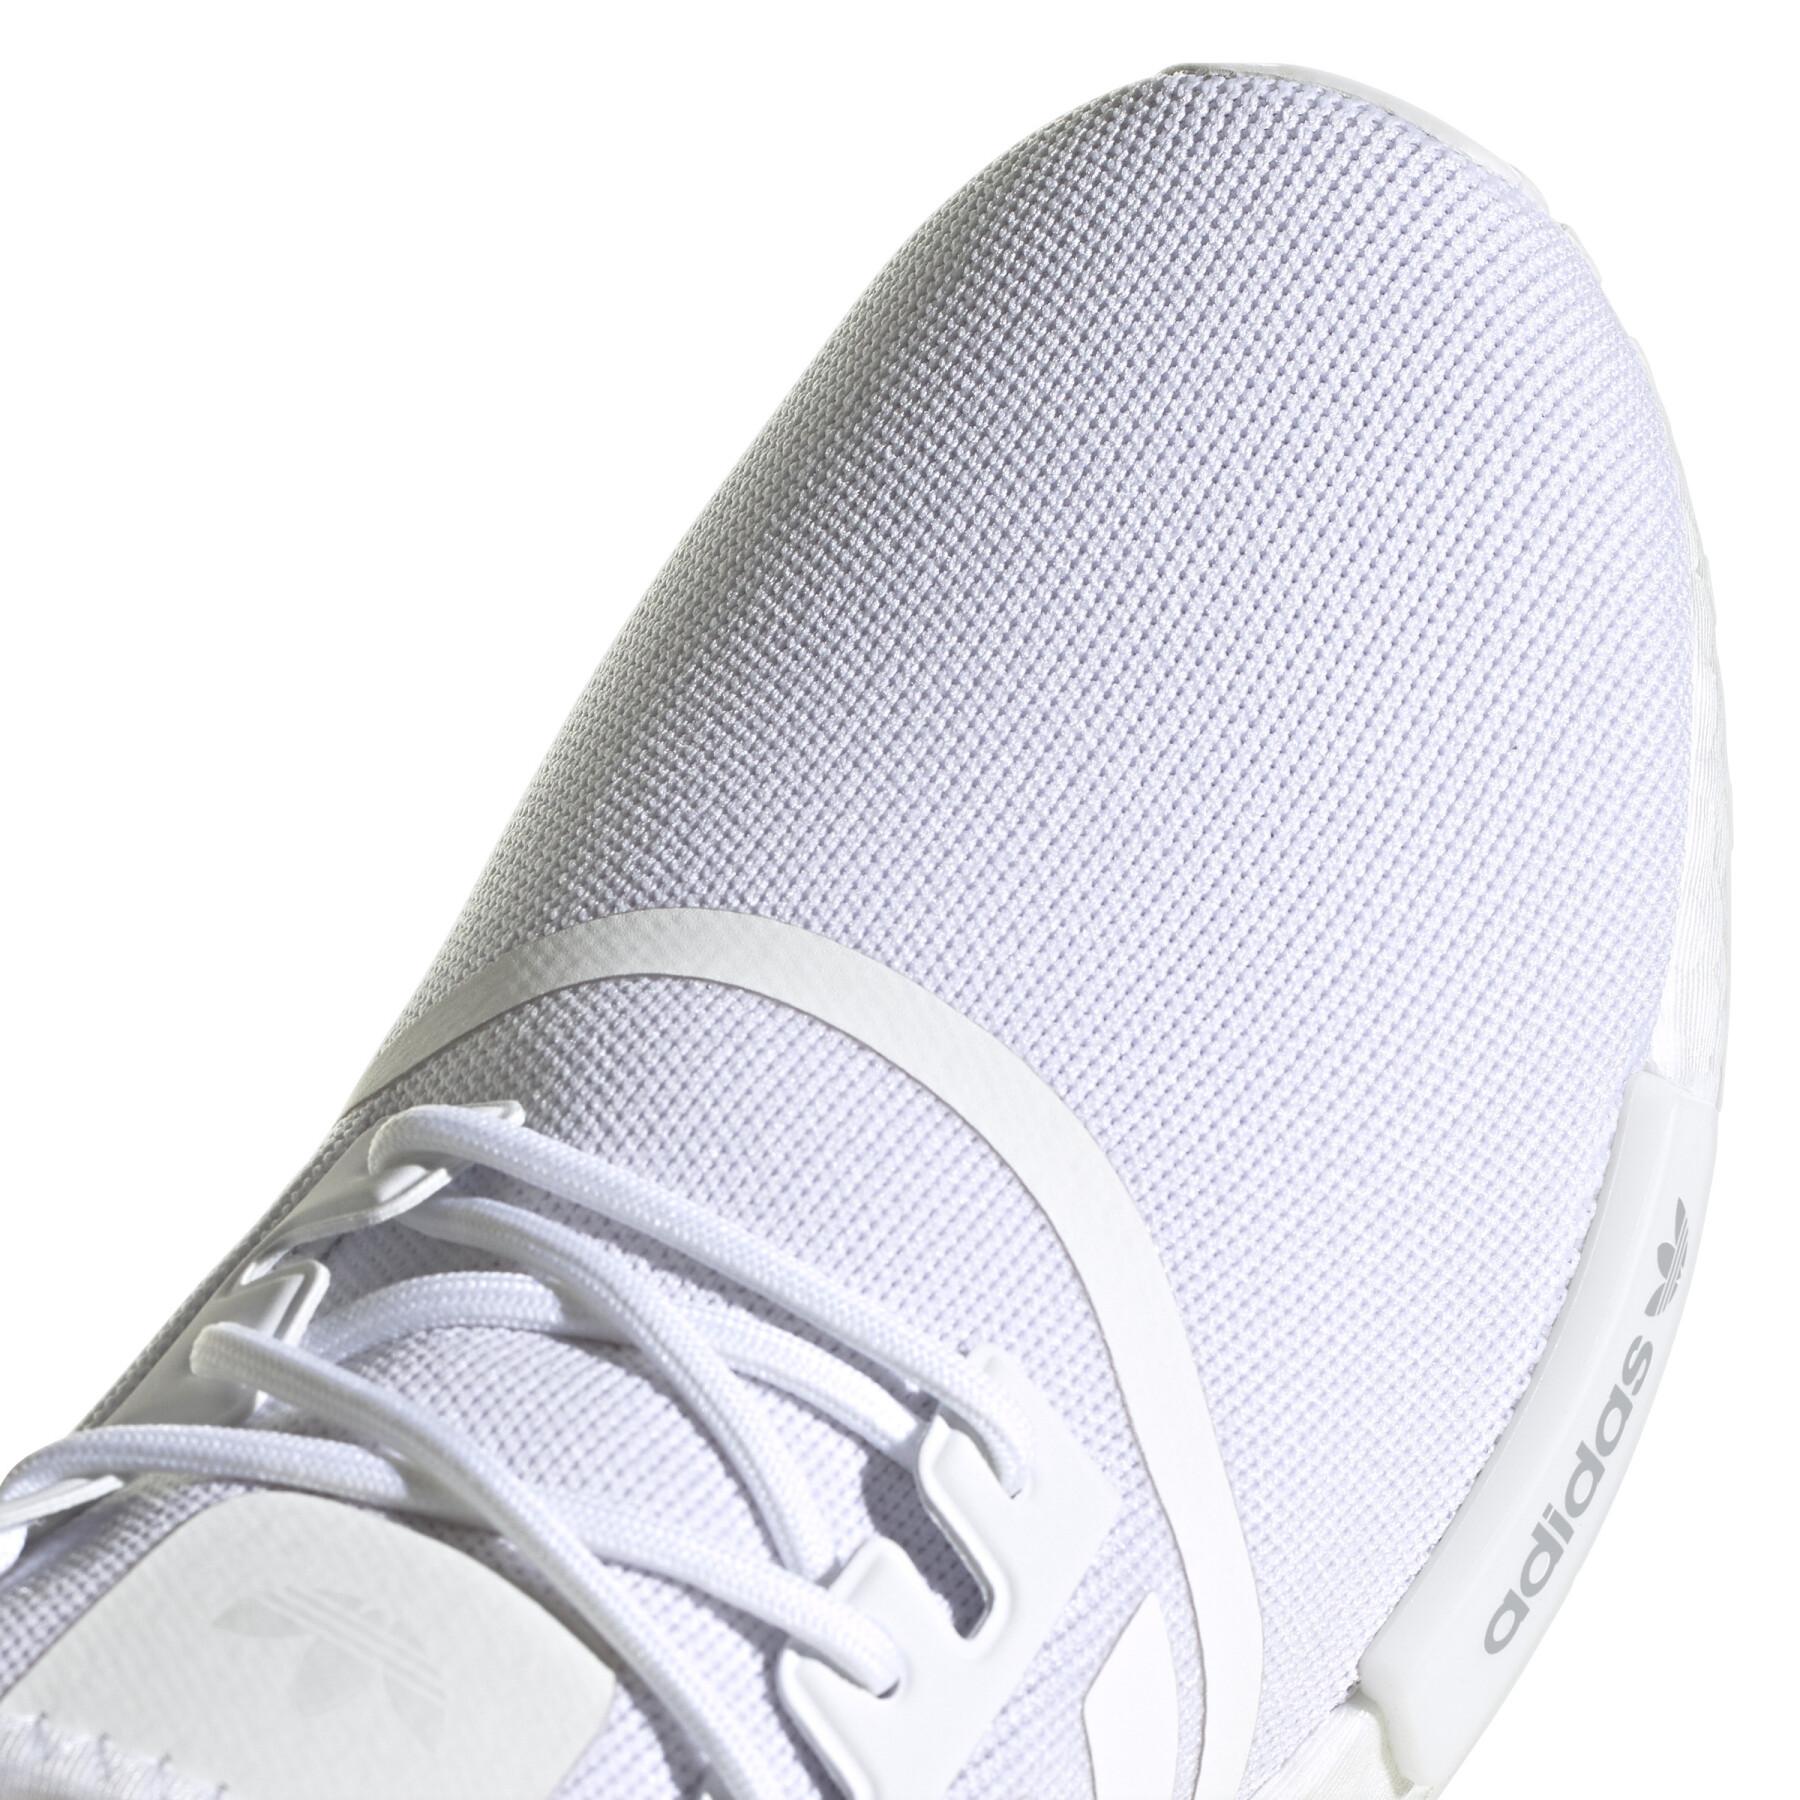 Sneakers adidas Originals NMD_R1 Primeblue